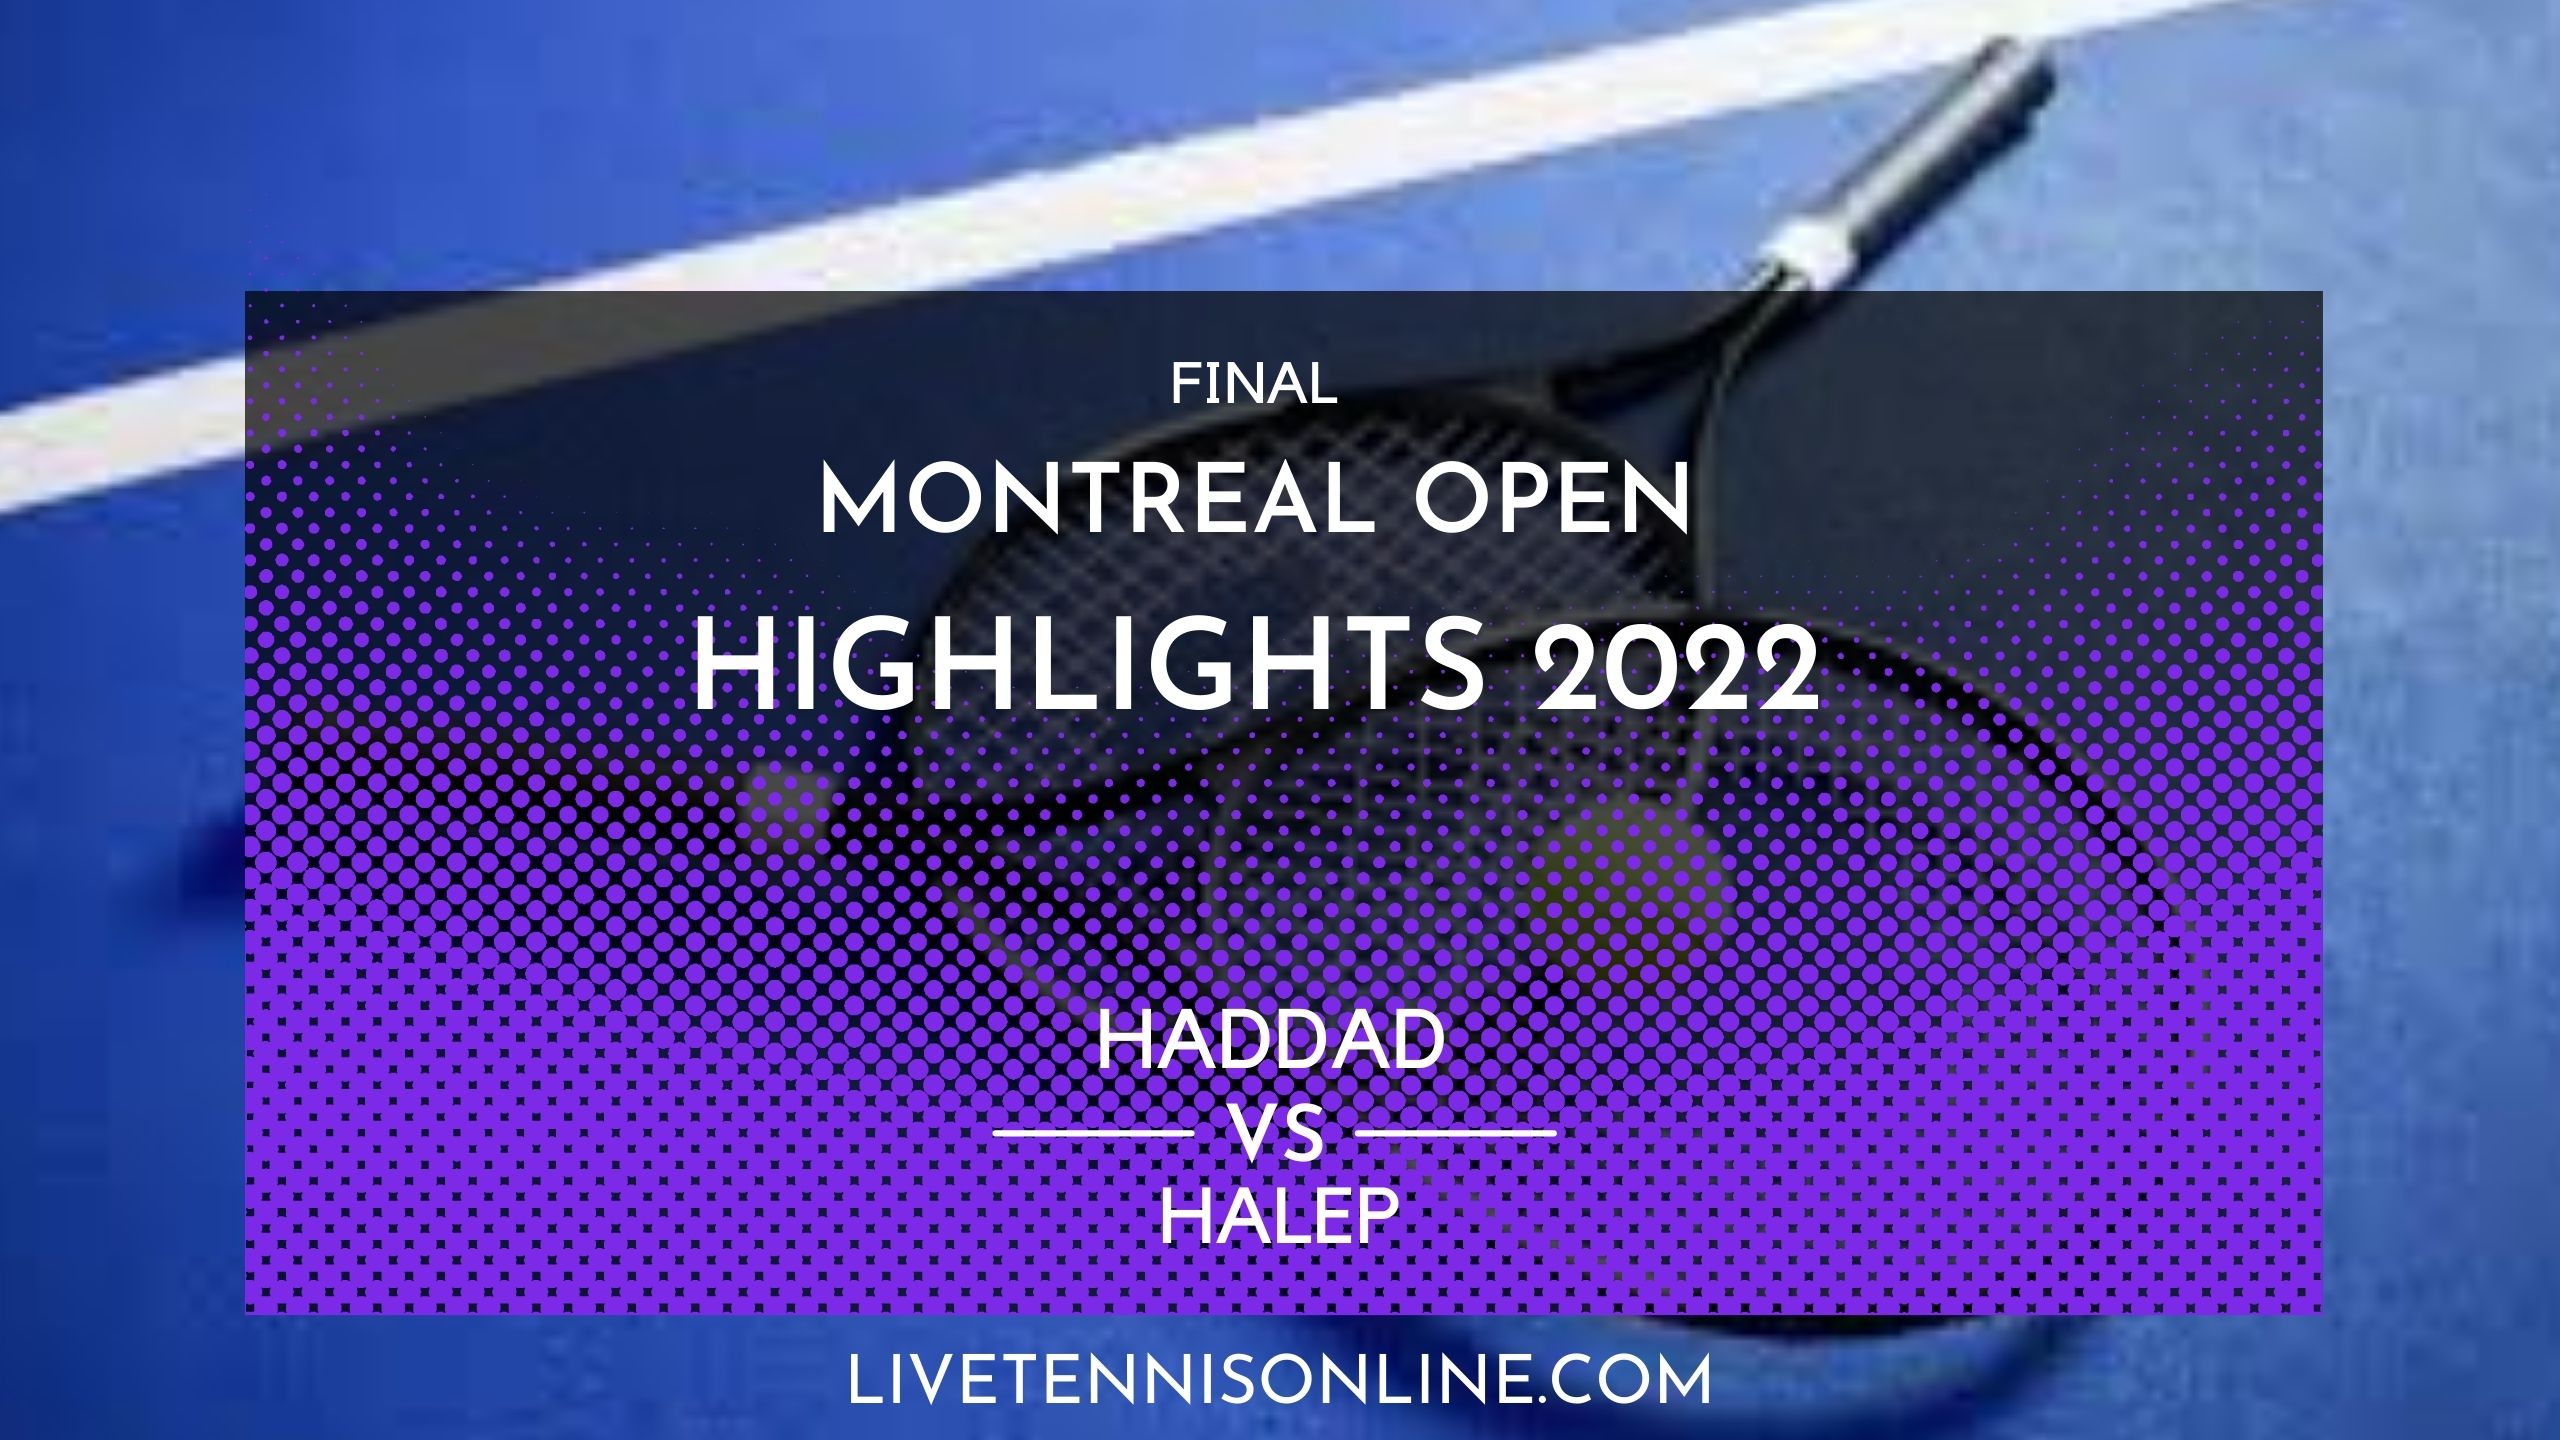 Haddad Vs Halep Final Highlights 2022 Montreal Open